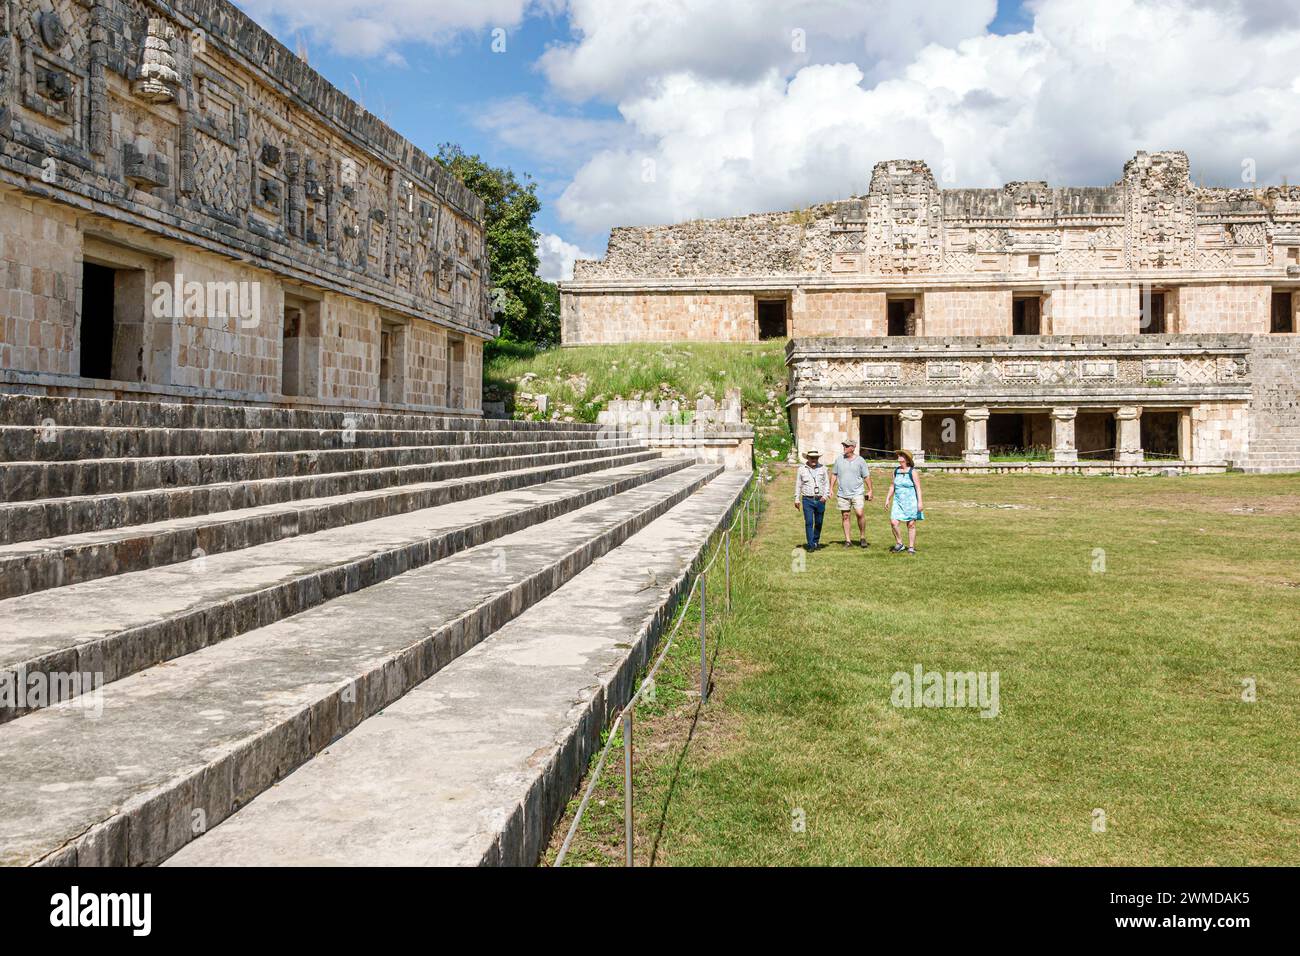 Merida Mexico,Puuc style Uxmal Archaeological Zone Site,Zona Arqueologica de Uxmal,classic Mayan city limestone,visitors man men male,woman women lady Stock Photo